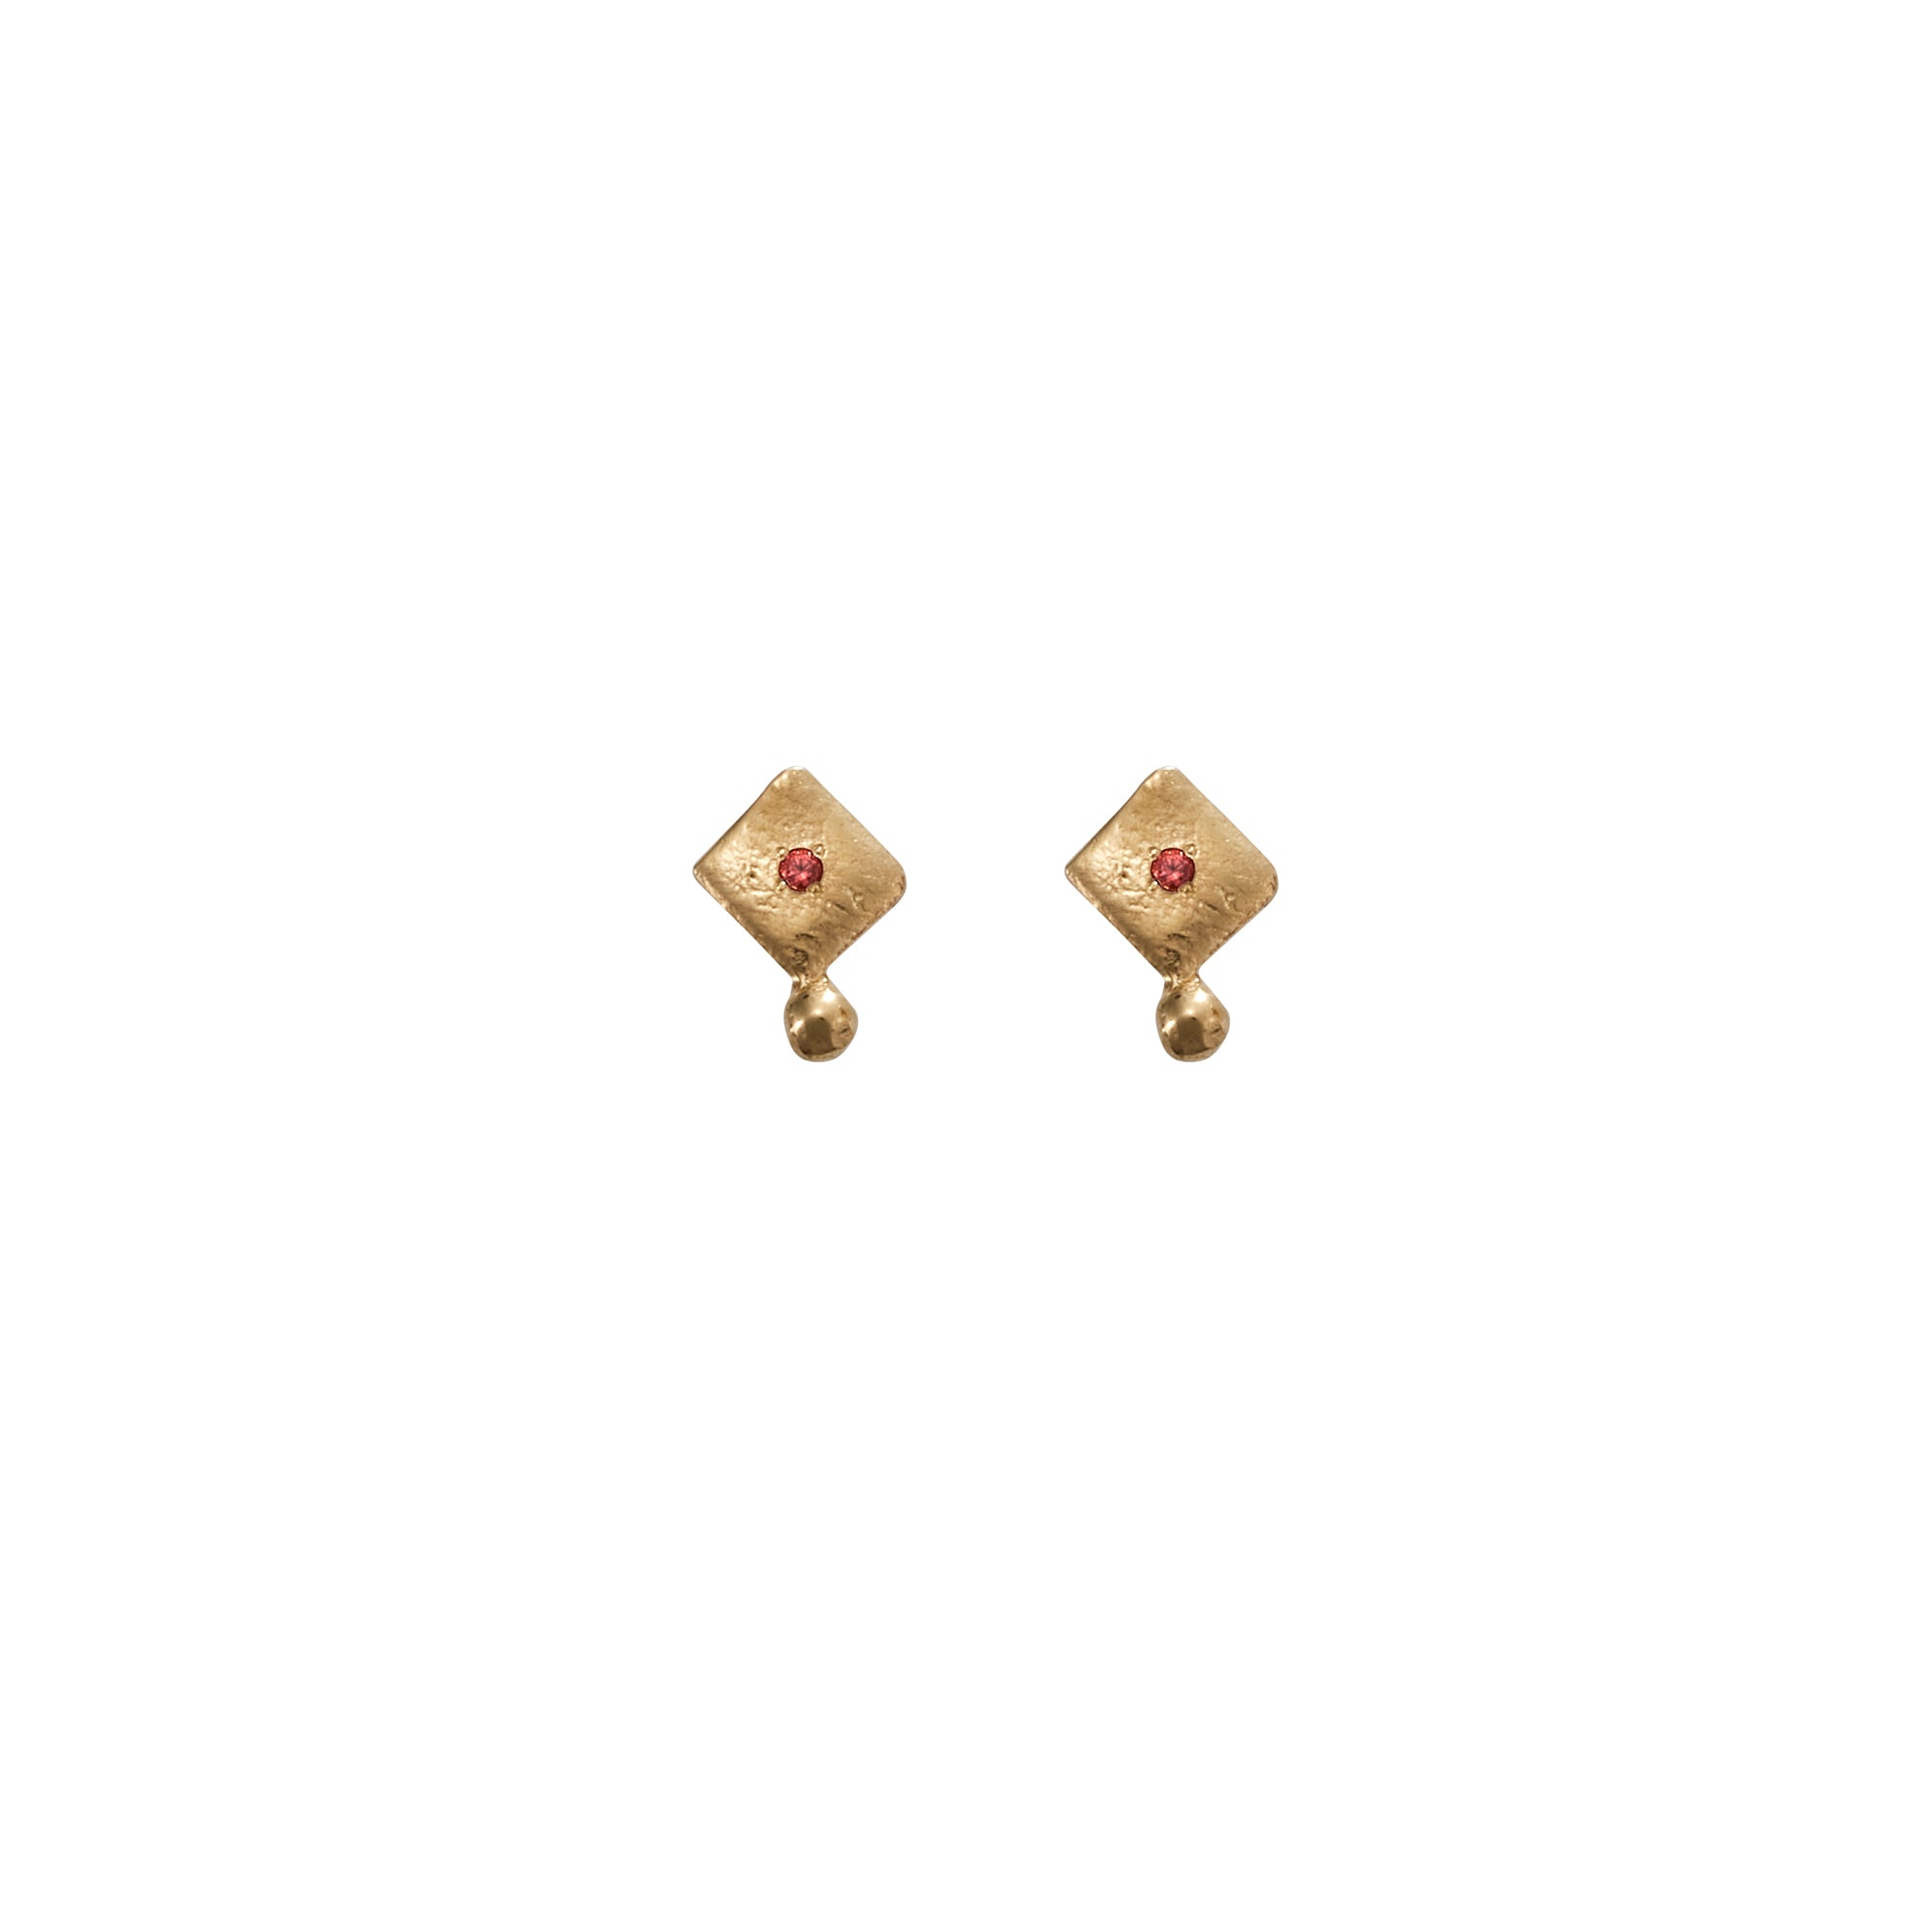 orange sapphire gemstone in diaond shape gold earrings with handmade jewellery accents